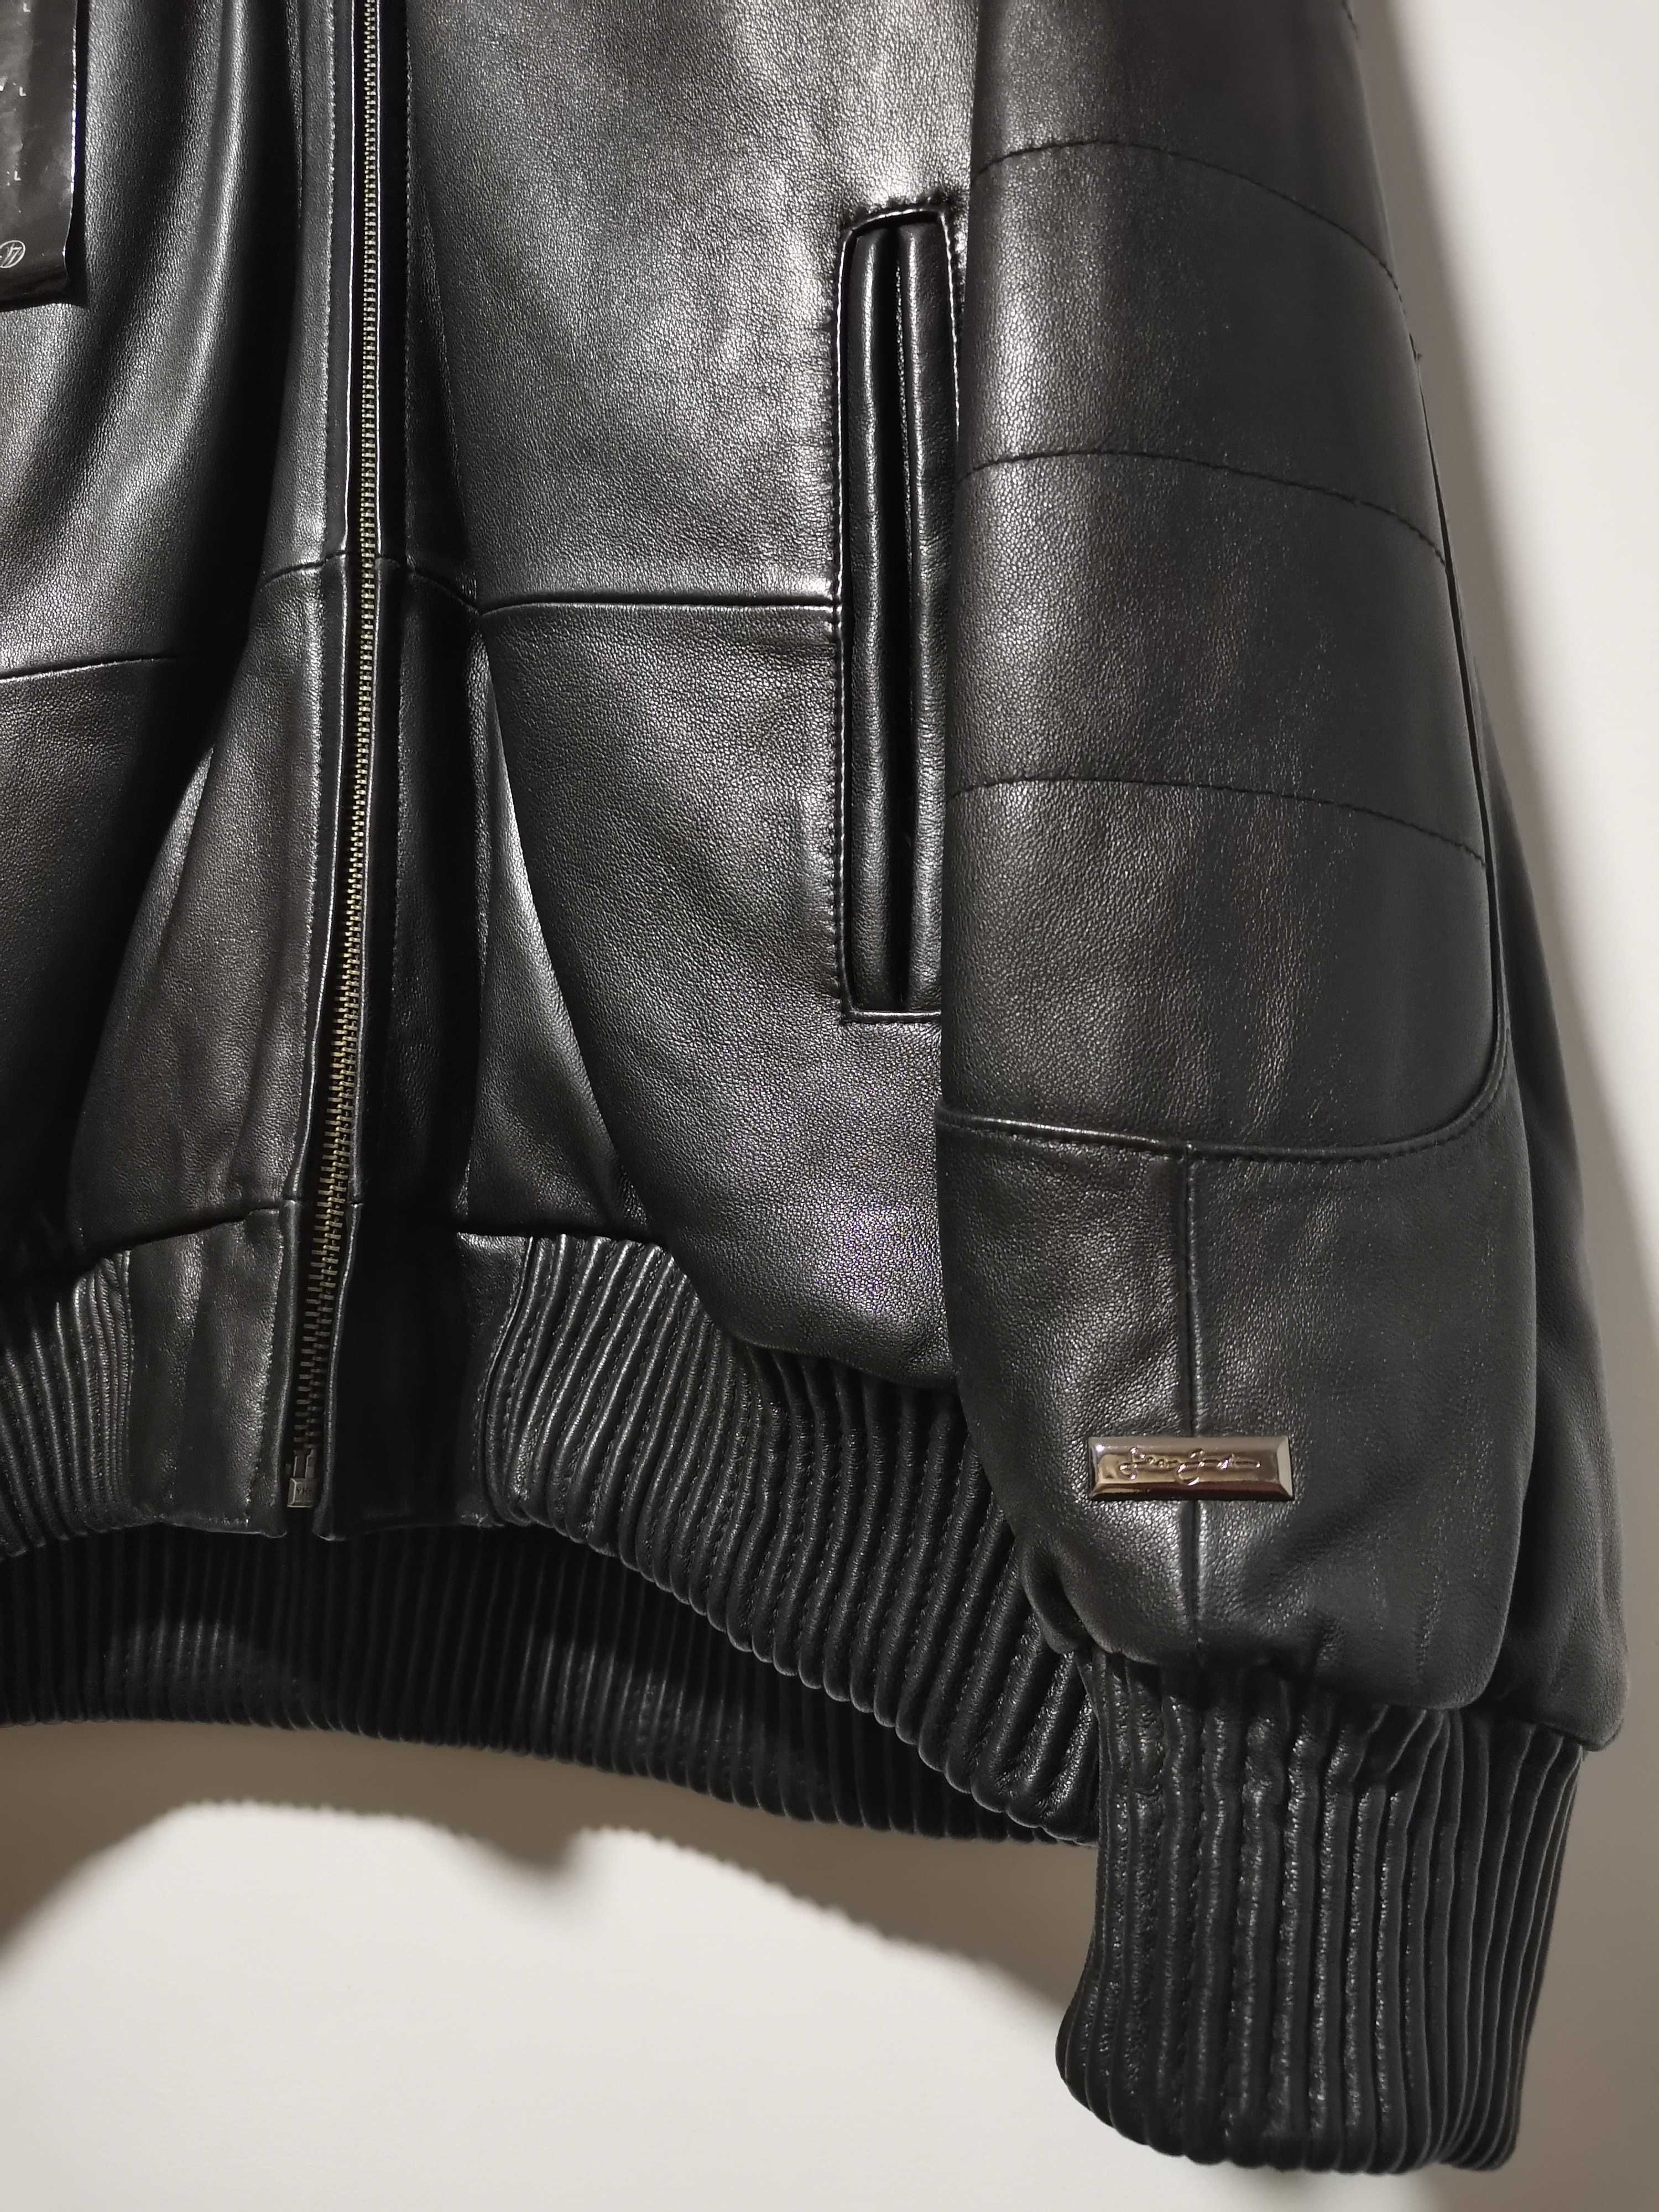 Sean John 'Leather Flight Jacket' (L)